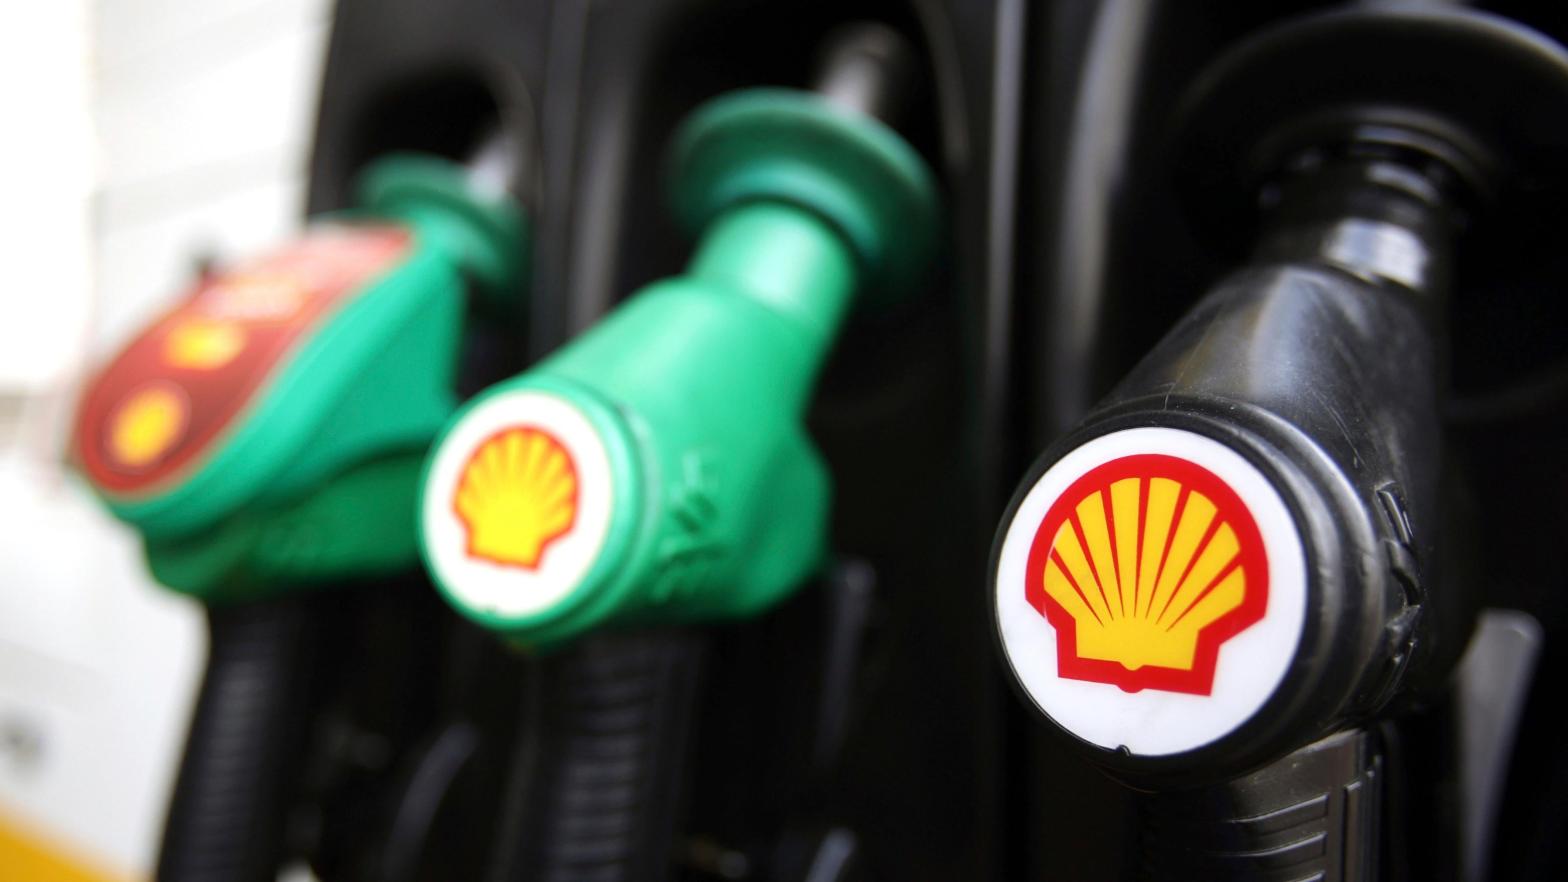 Shell logos on petrol pumps at a petrol station in London. (Photo: Press Association, AP)